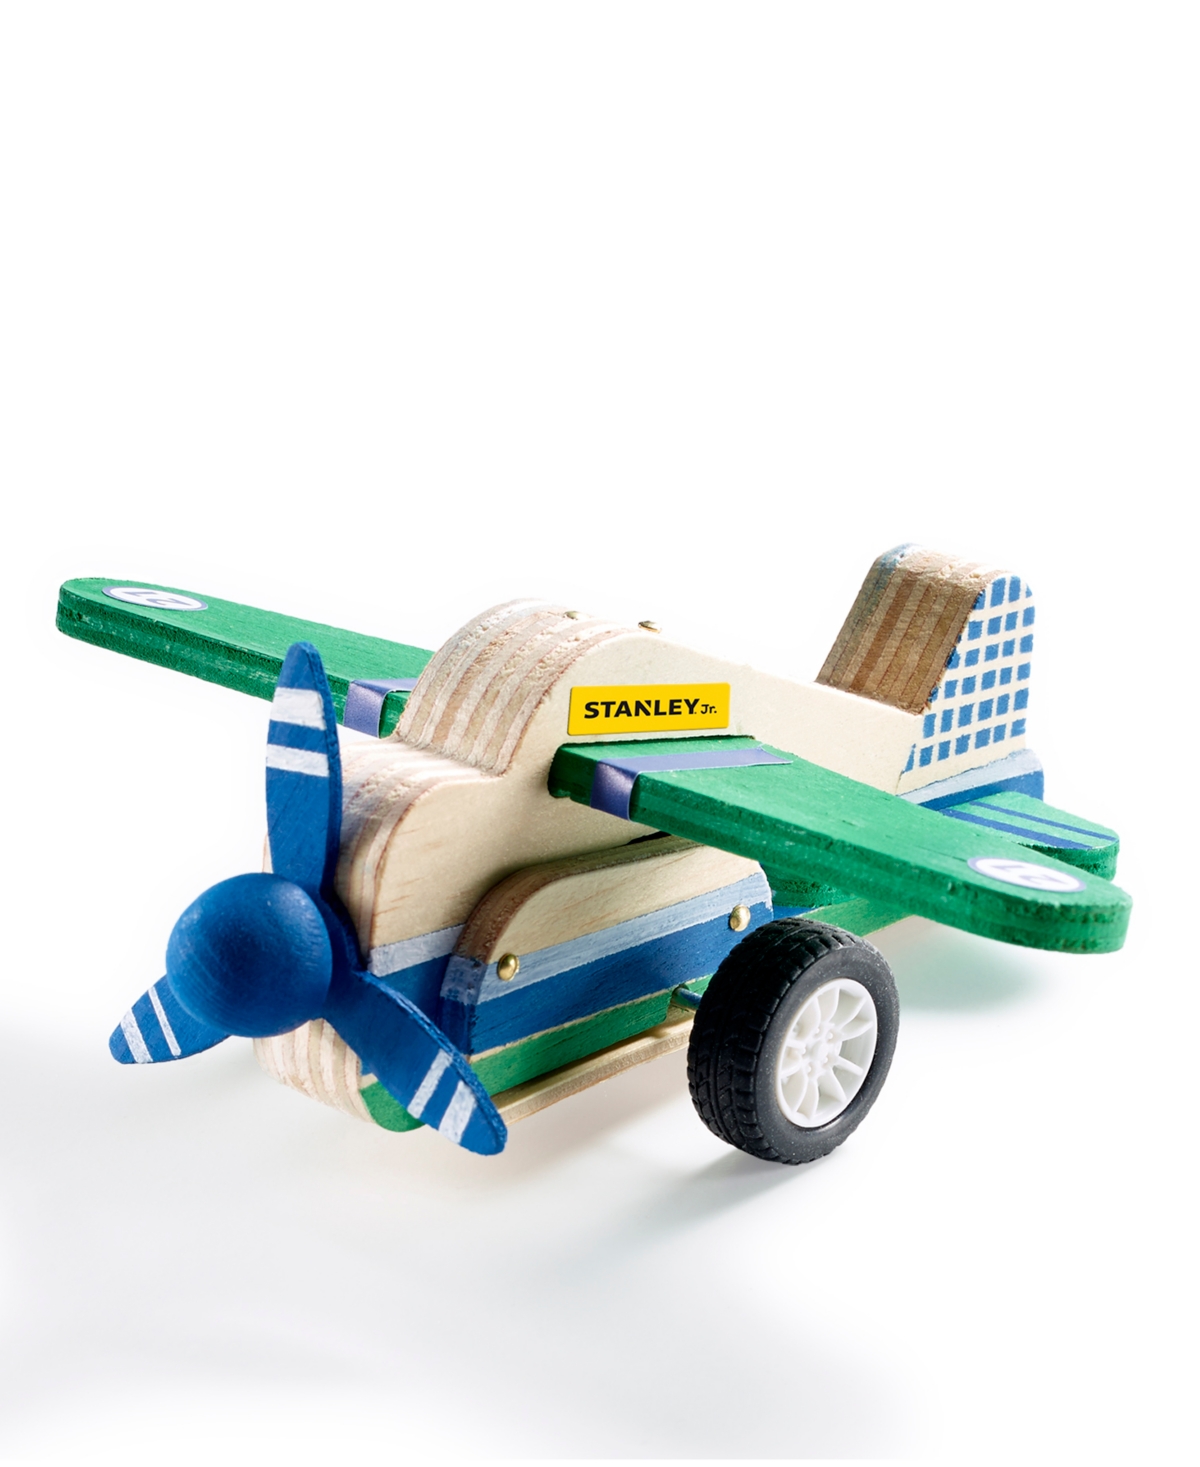 Diy Wood Airplane Pull Back Toy Kit - Natural